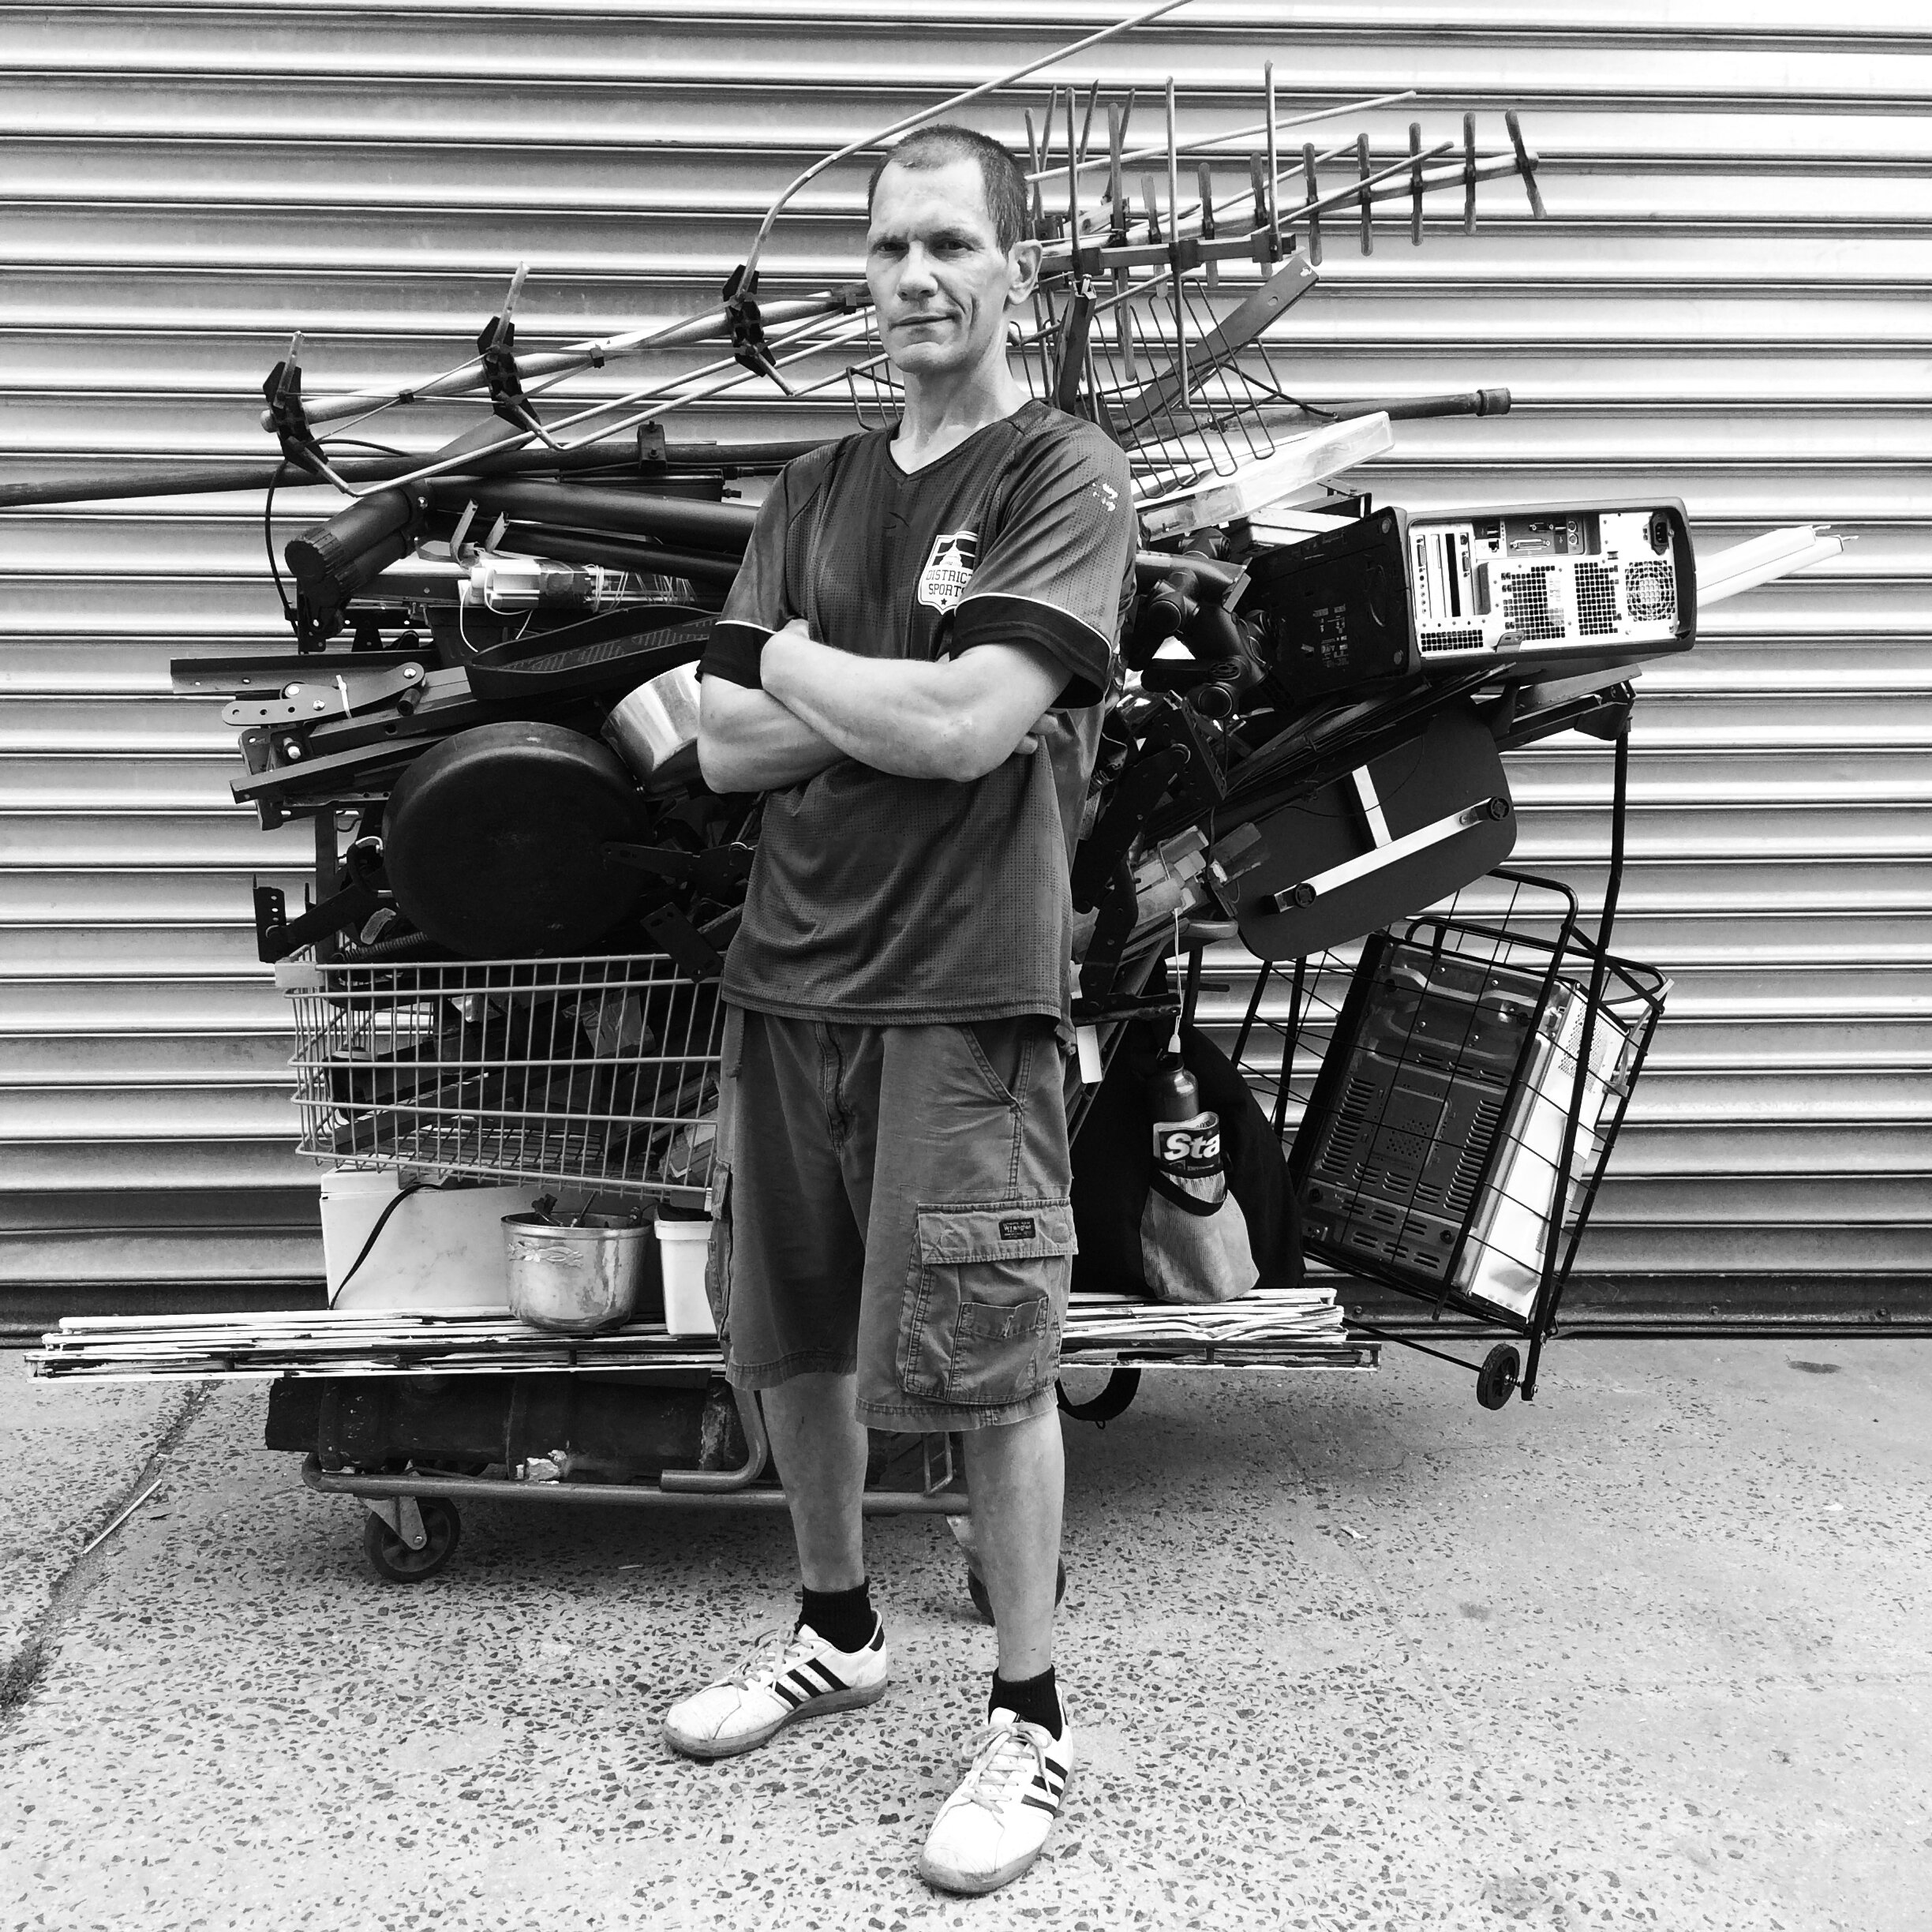 Jay. scrap metal collector. Williamsburg, Brooklyn. July 15th, 2015.